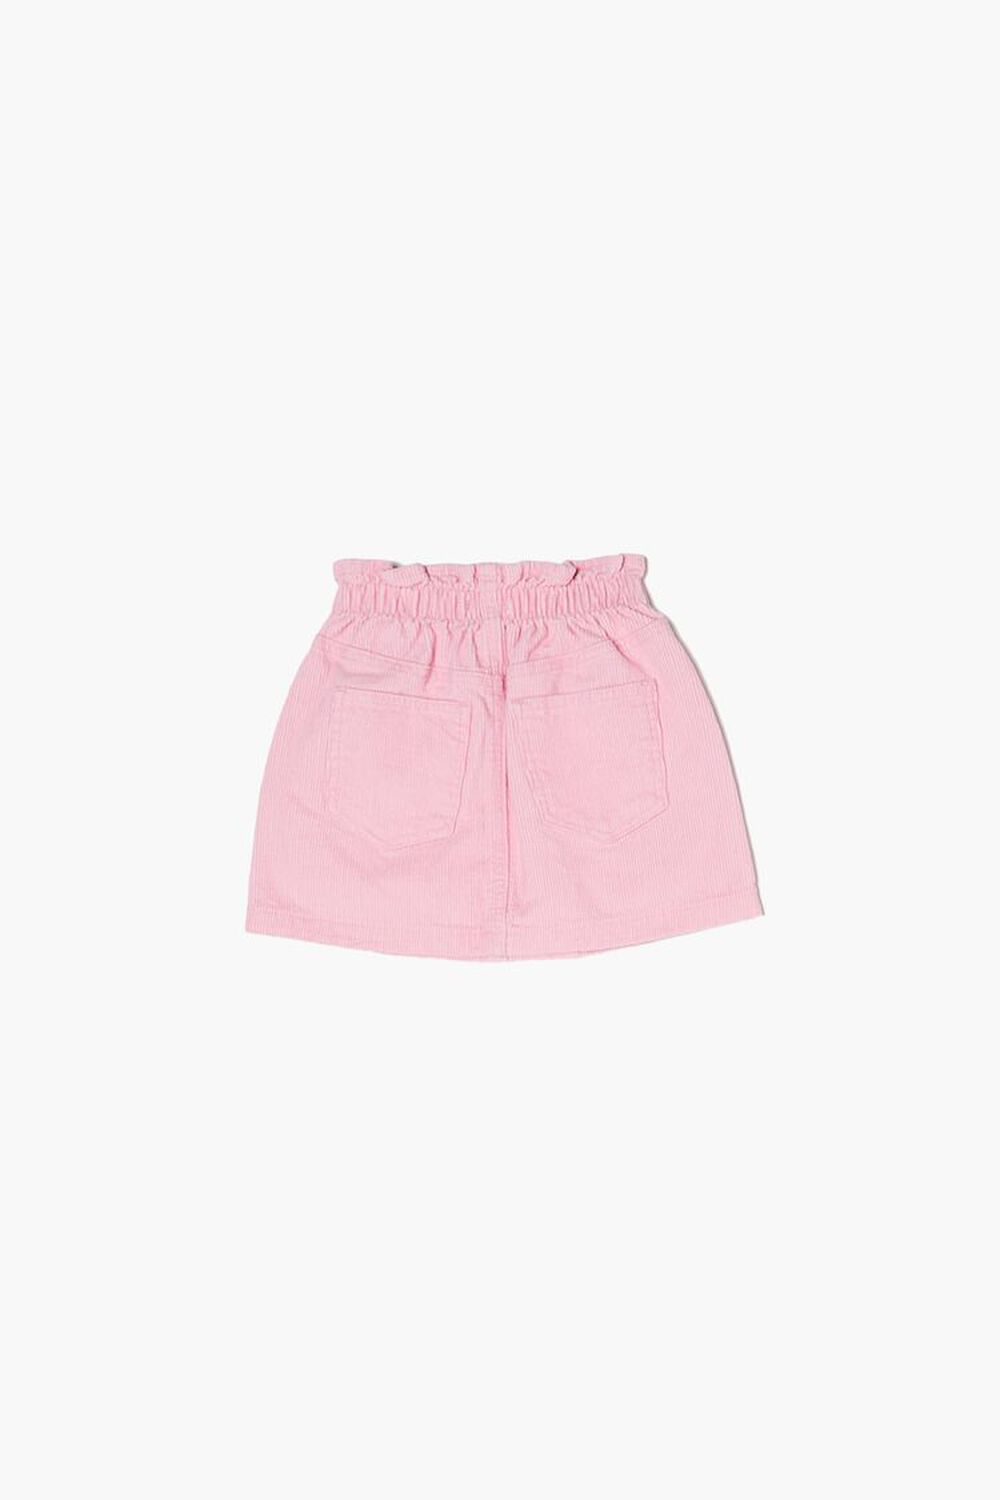 Forever 21 Button-Down Corduroy Skirt  Pink skirt outfits, Outfits,  Corduroy skirt outfit